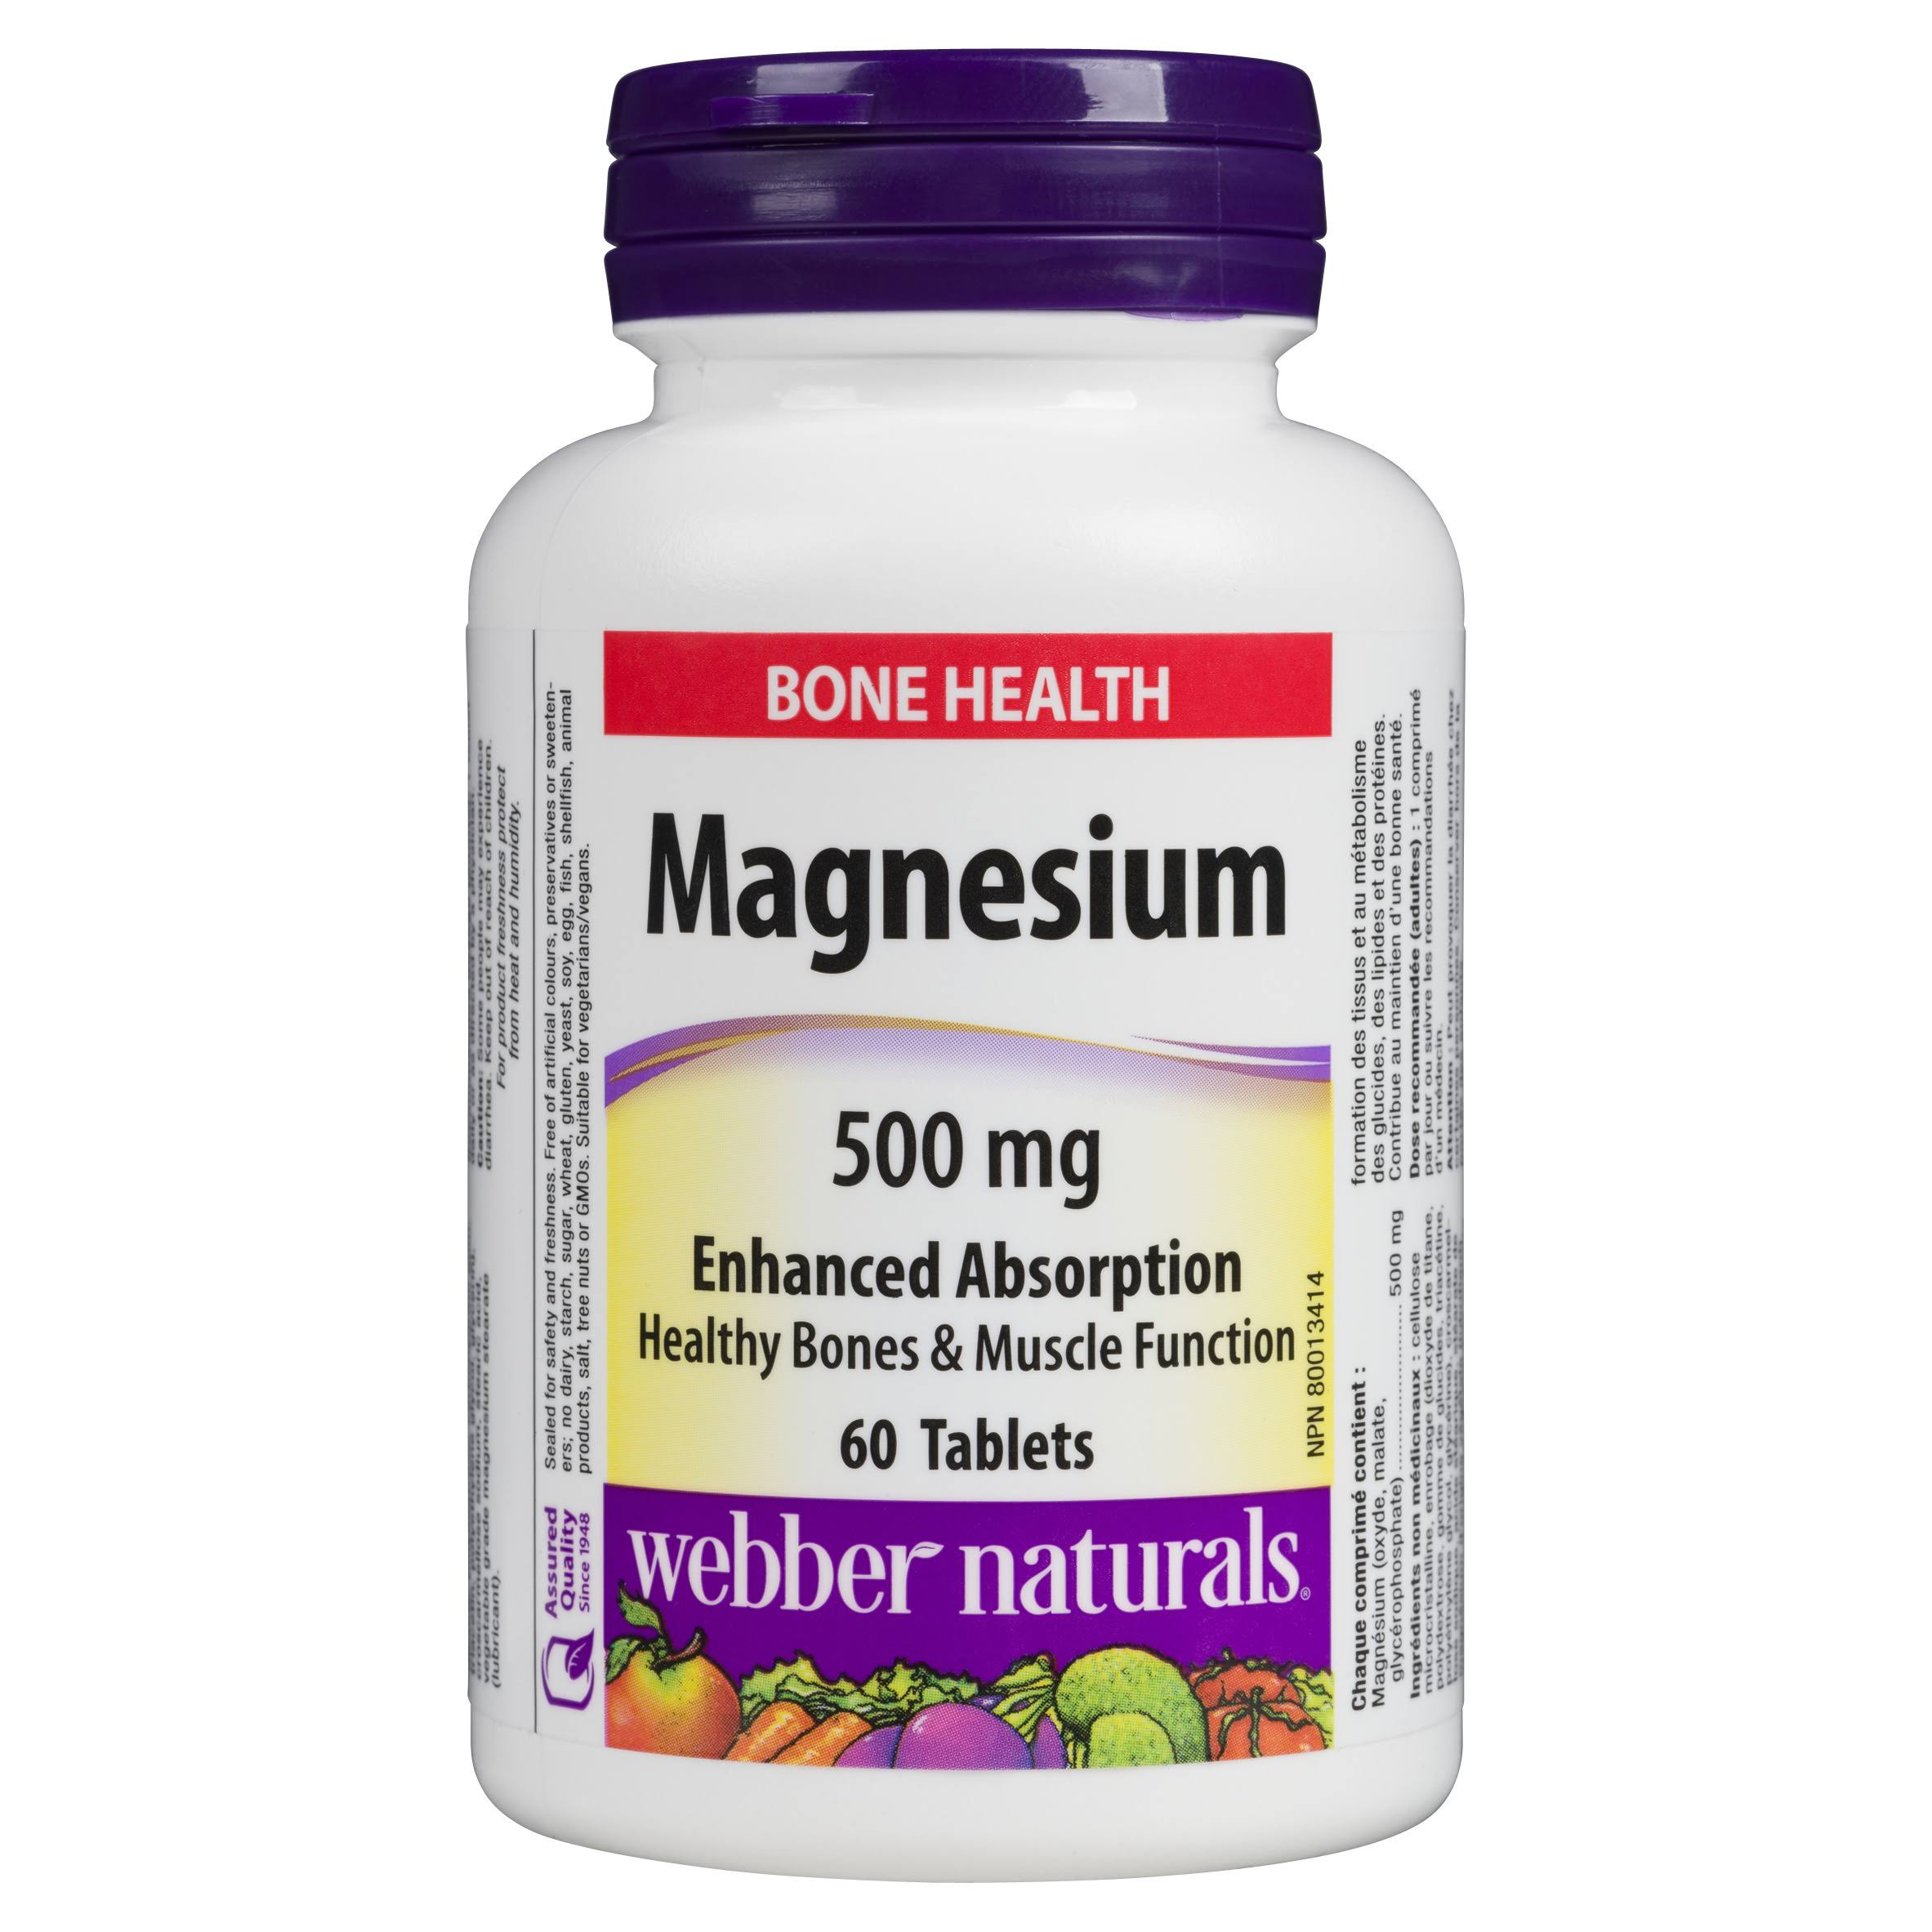 Webber Naturals Magnesium Supplement - 500mg, 60 Tablets